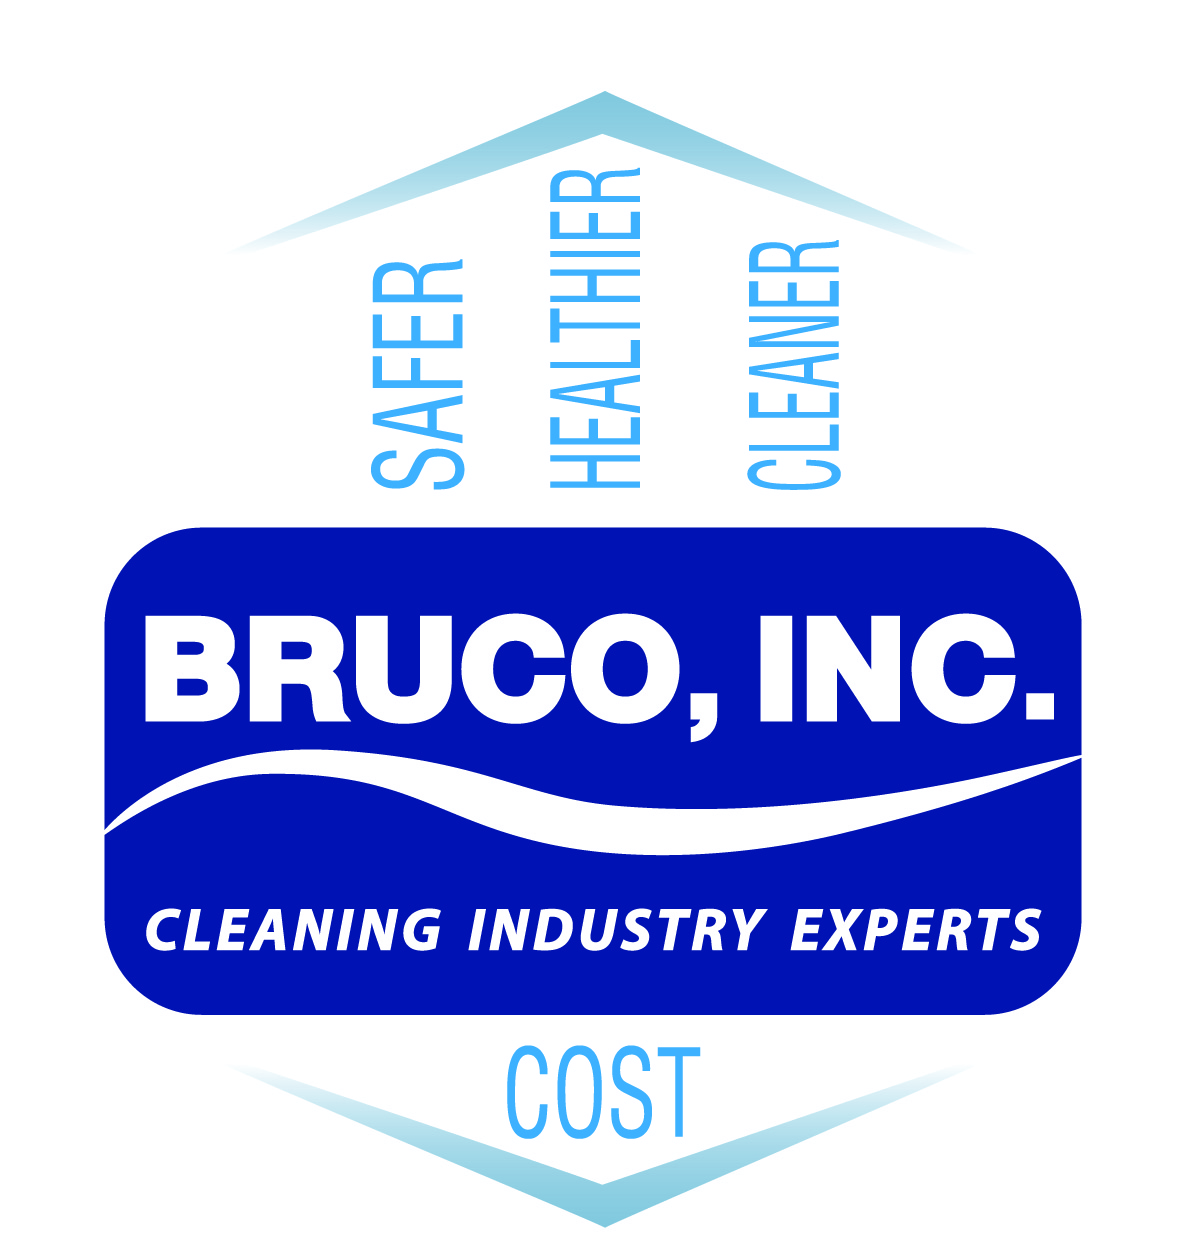 BRUCO Lower Cost Logo.jpg - 883.12 Kb